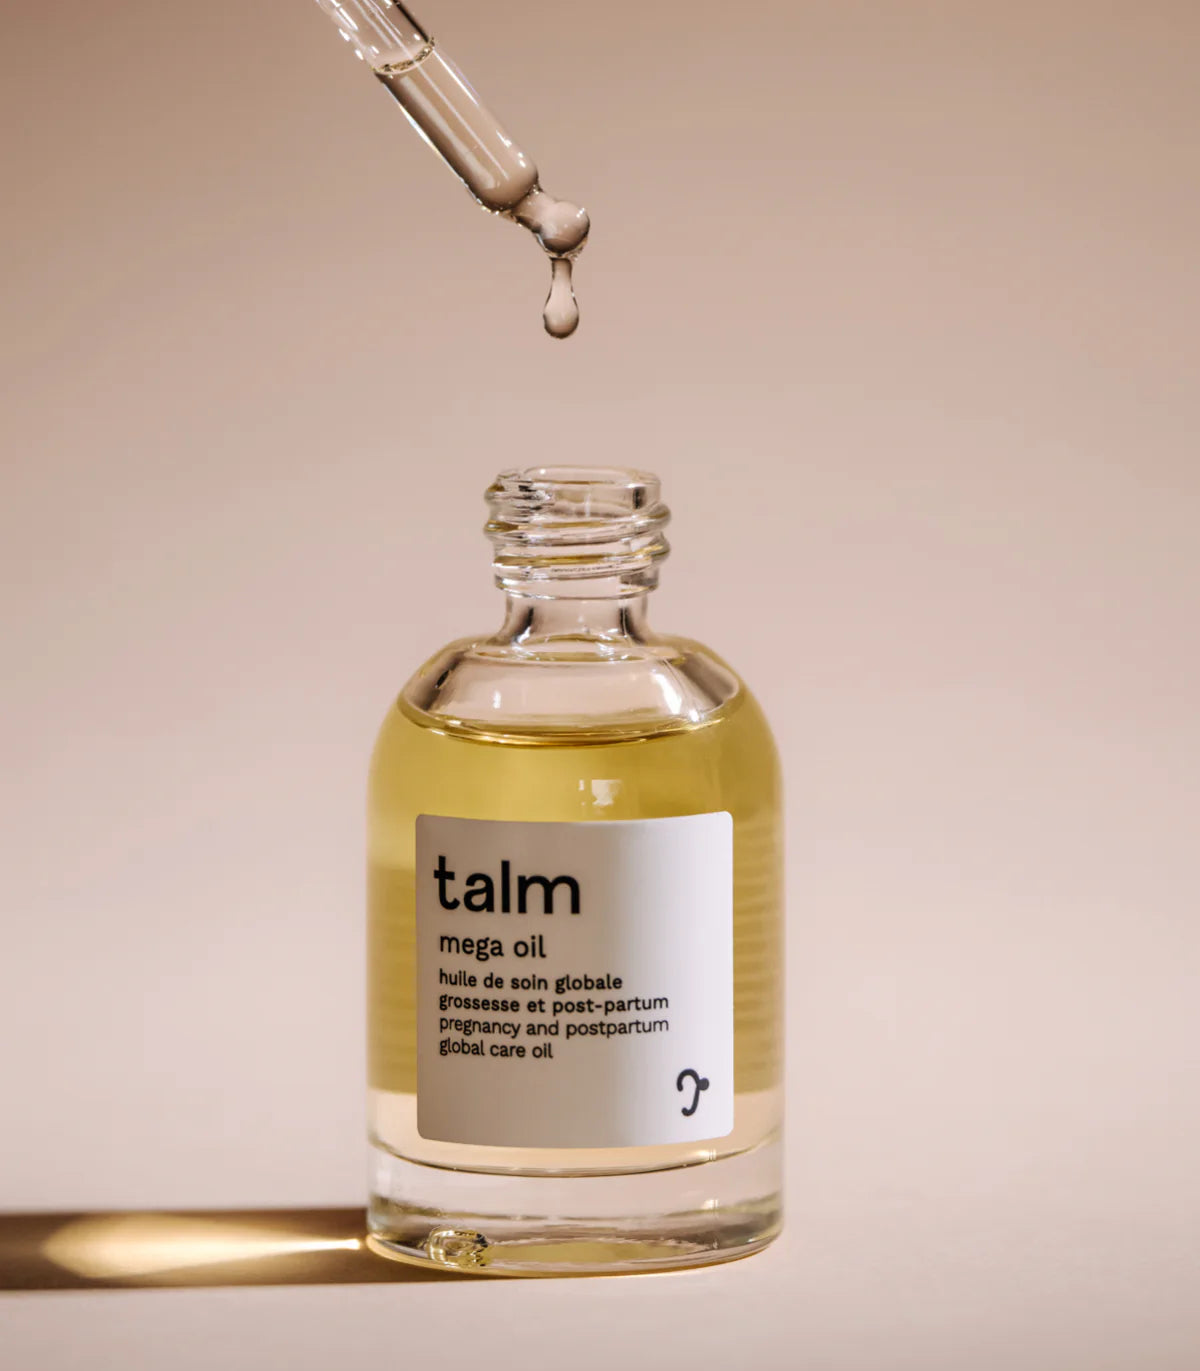 Talm - Mega oil - Global skincare oil for pregnancy and postpartum (100ml)